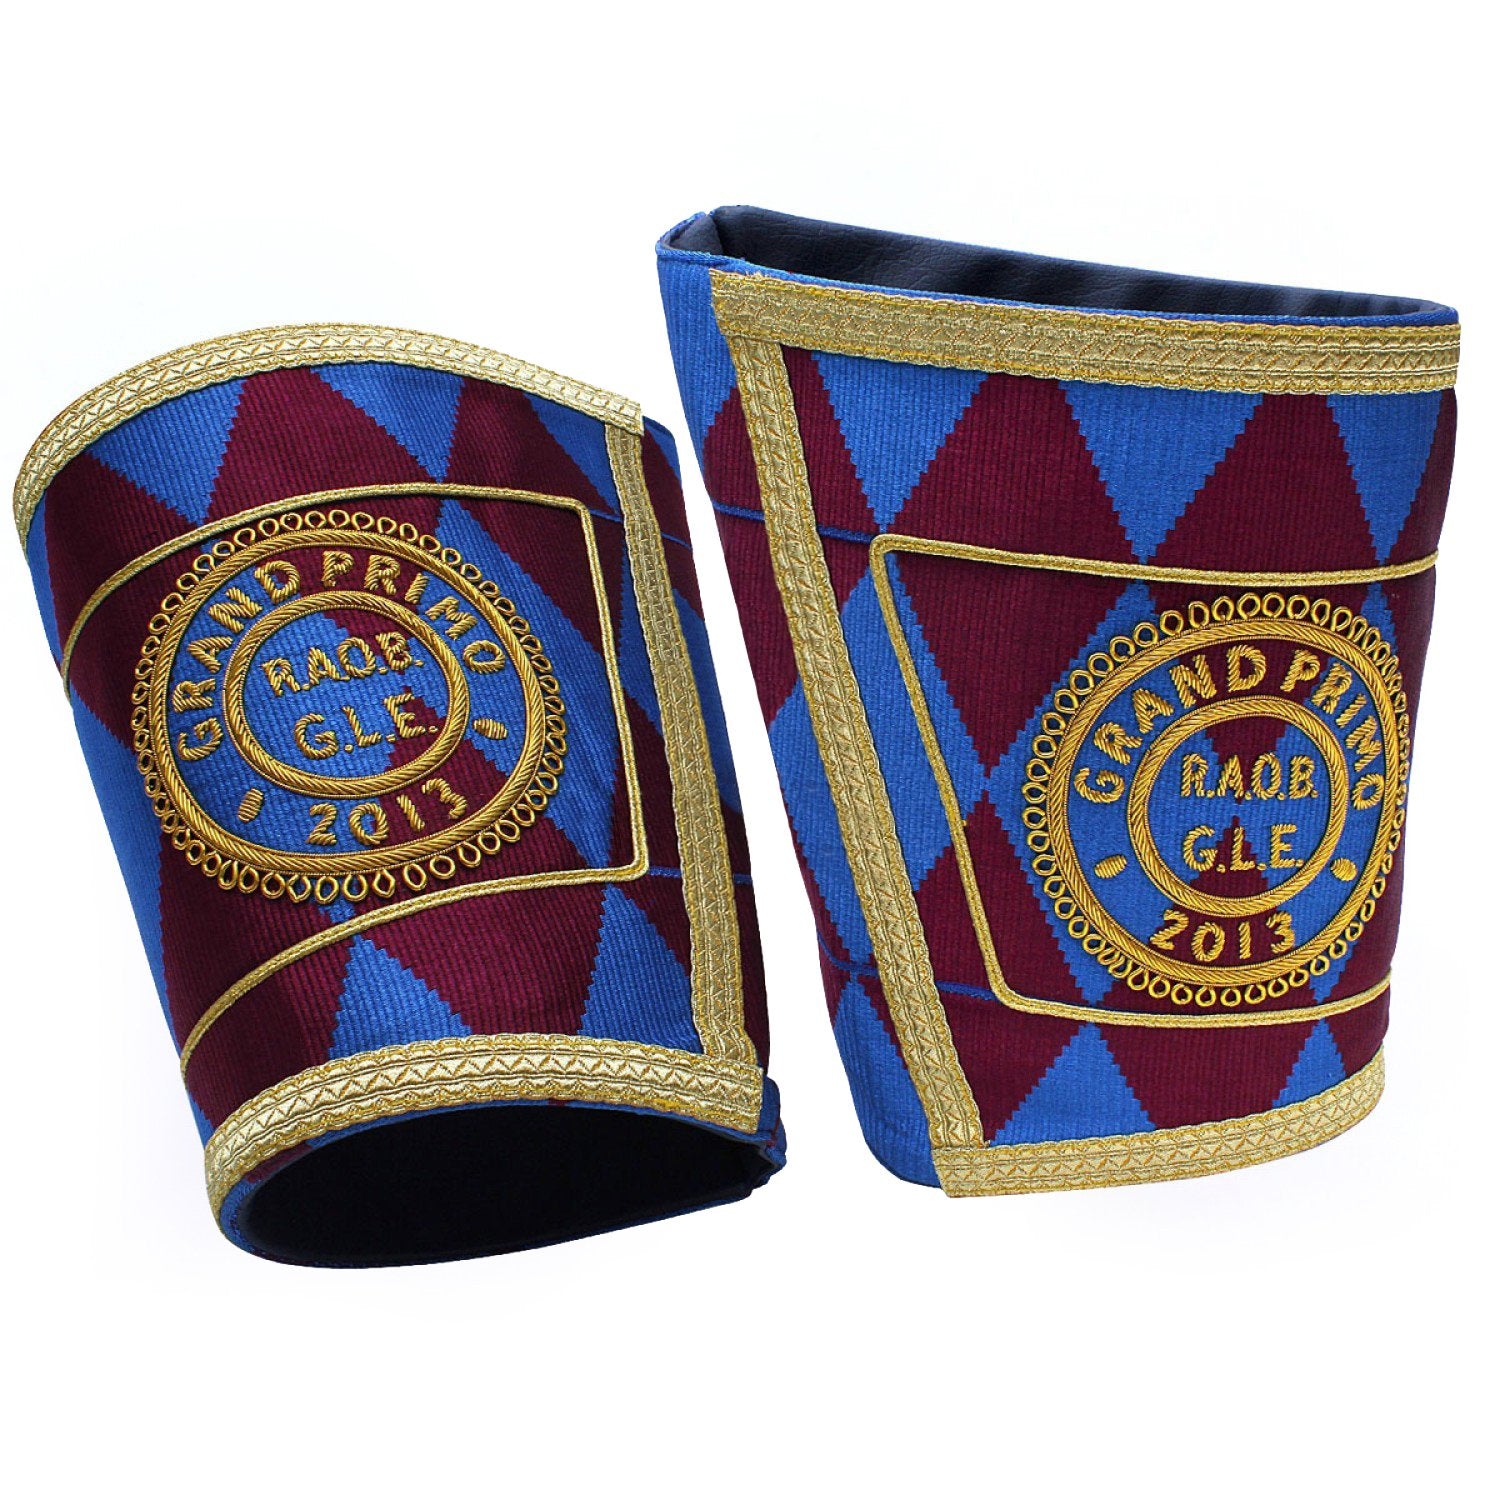 Grand Primo Royal Antediluvian Order of Buffaloes R.A.O.B. Cuff - Red & Blue - Bricks Masons